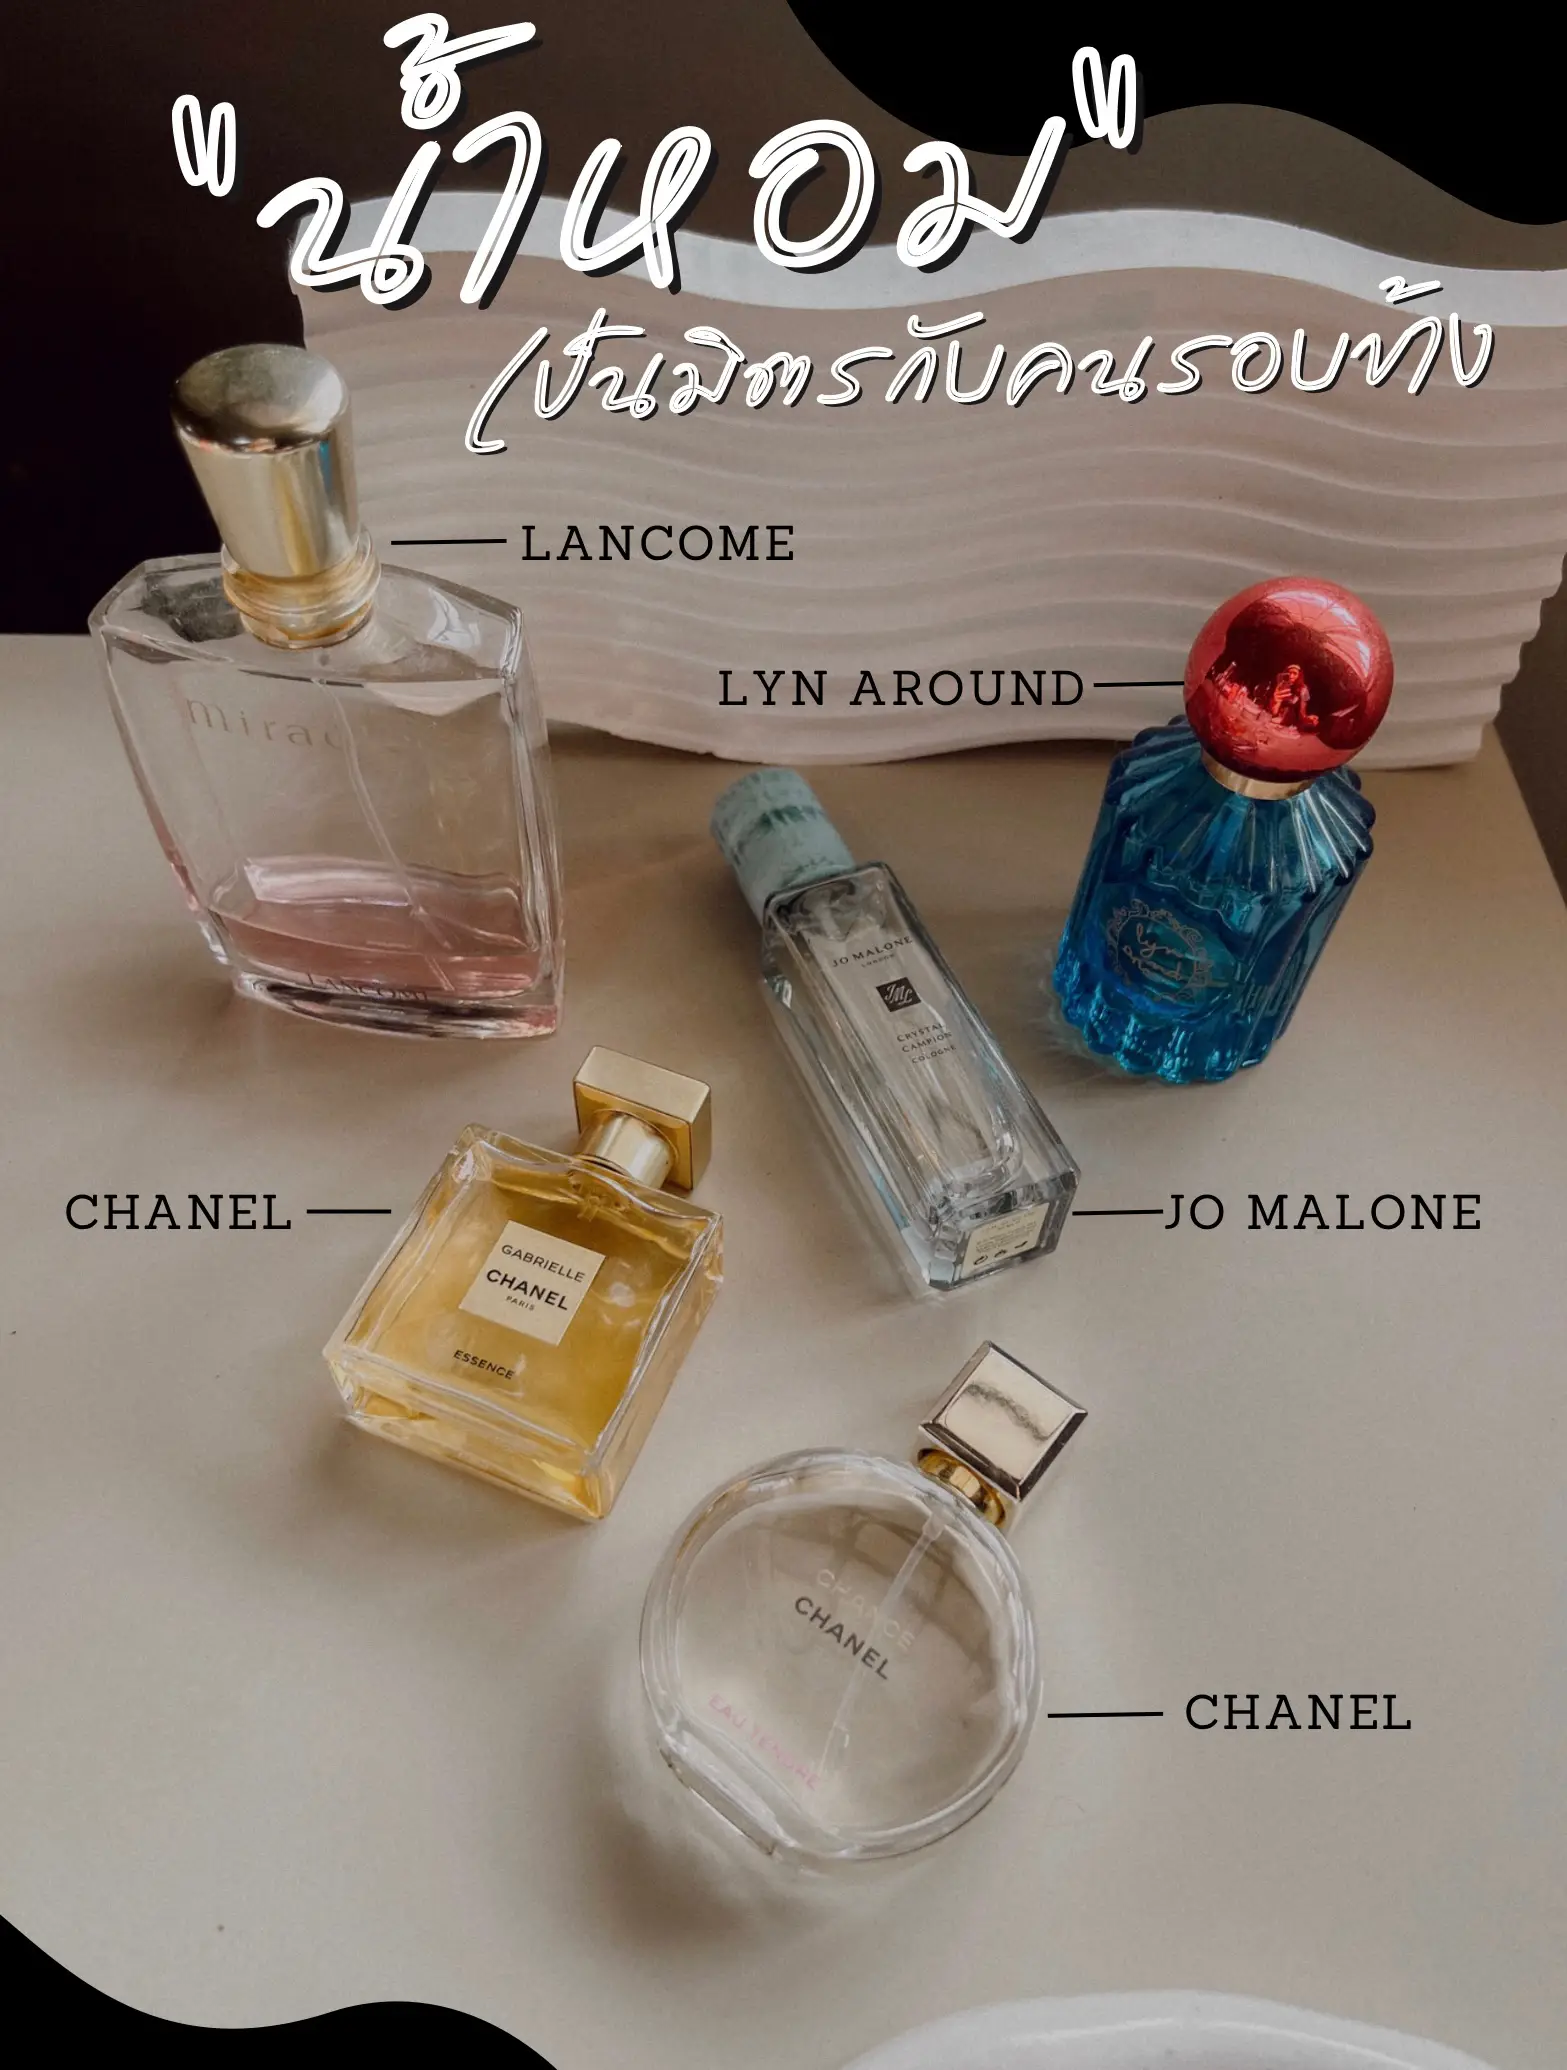 Tas berbentuk perfume CHANEL?, Gallery posted by Natasshanjani